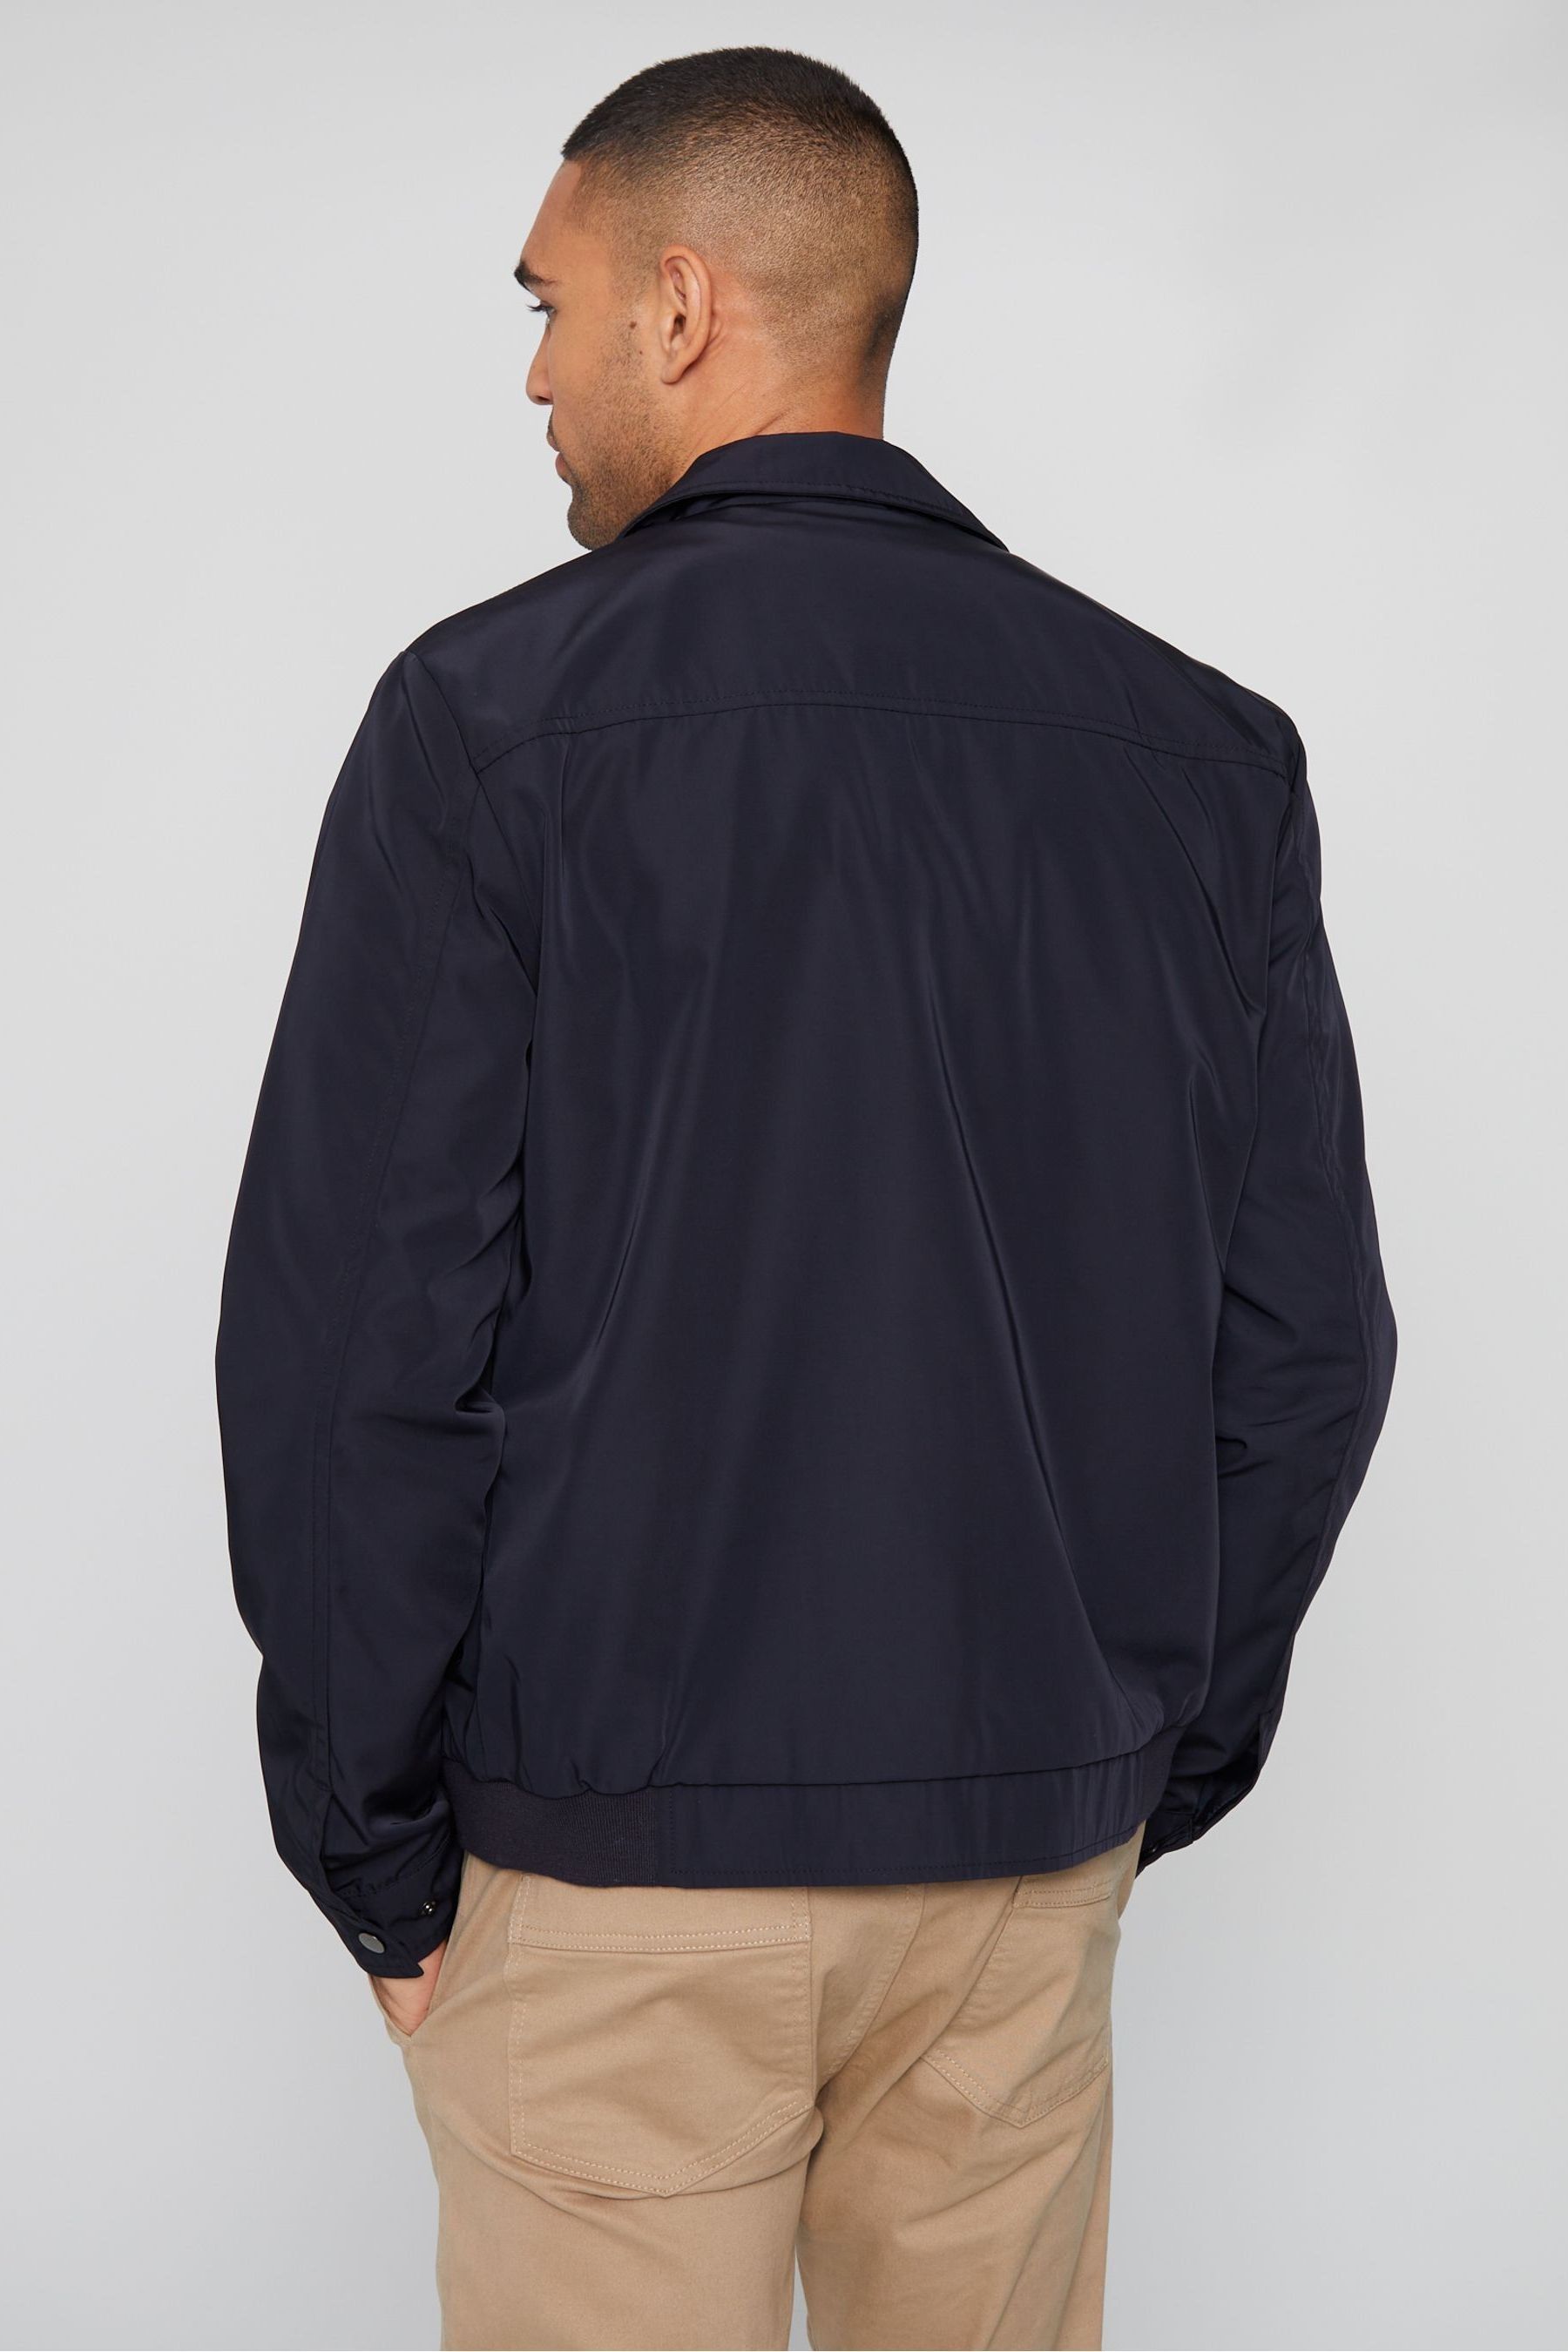 Buy Threadbare Blue Luxe Showerproof Zip Up Collared Jacket from the ...